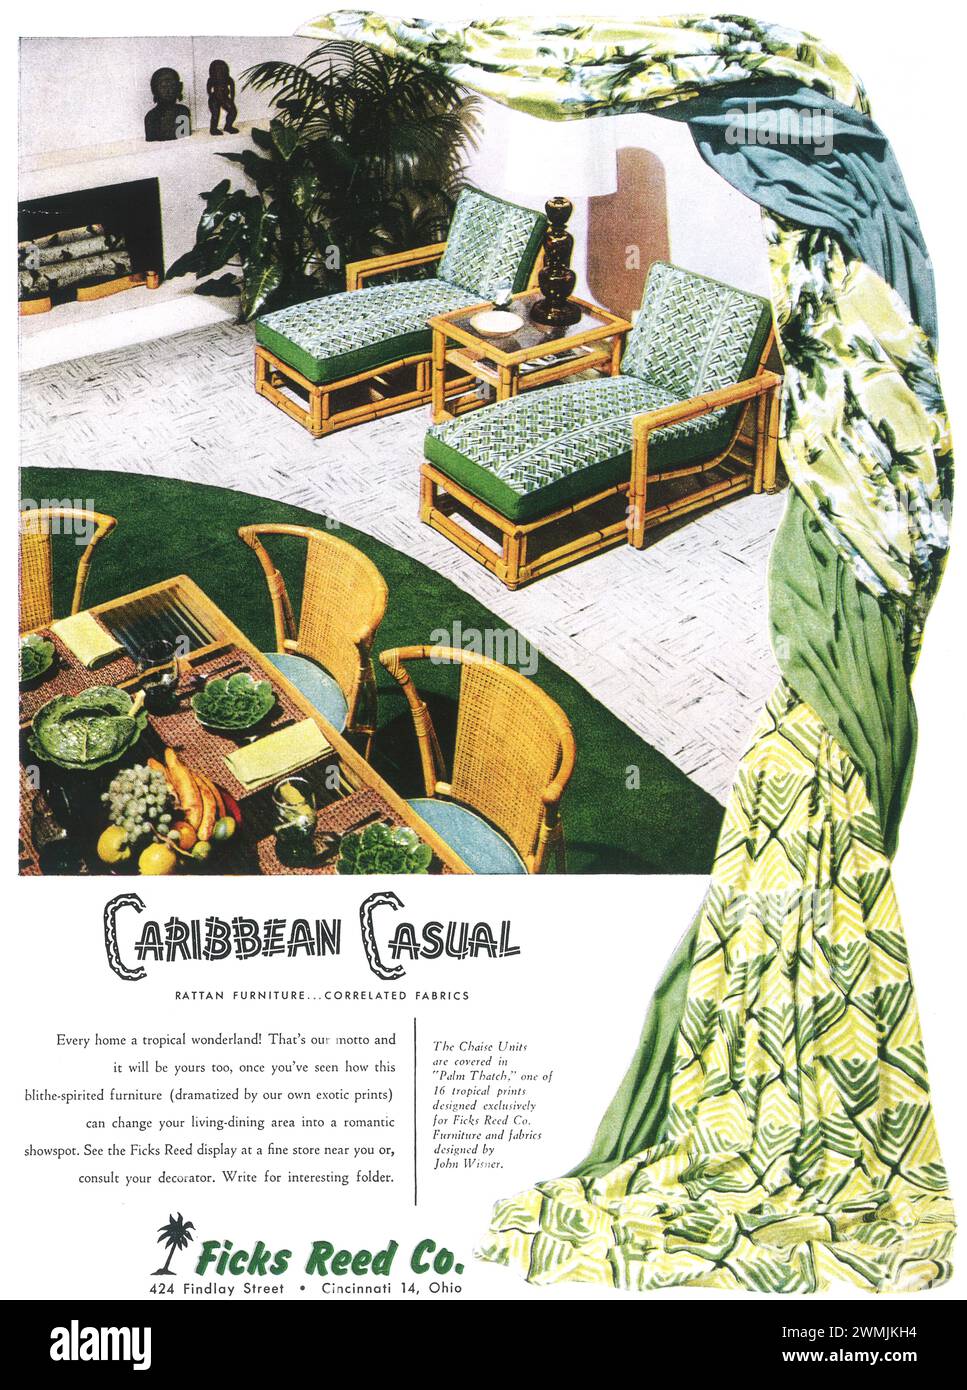 1950s Ficks Reed Co Ohio Caribbean casual print ad. Rattan furniture...correlated fabrics Stock Photo